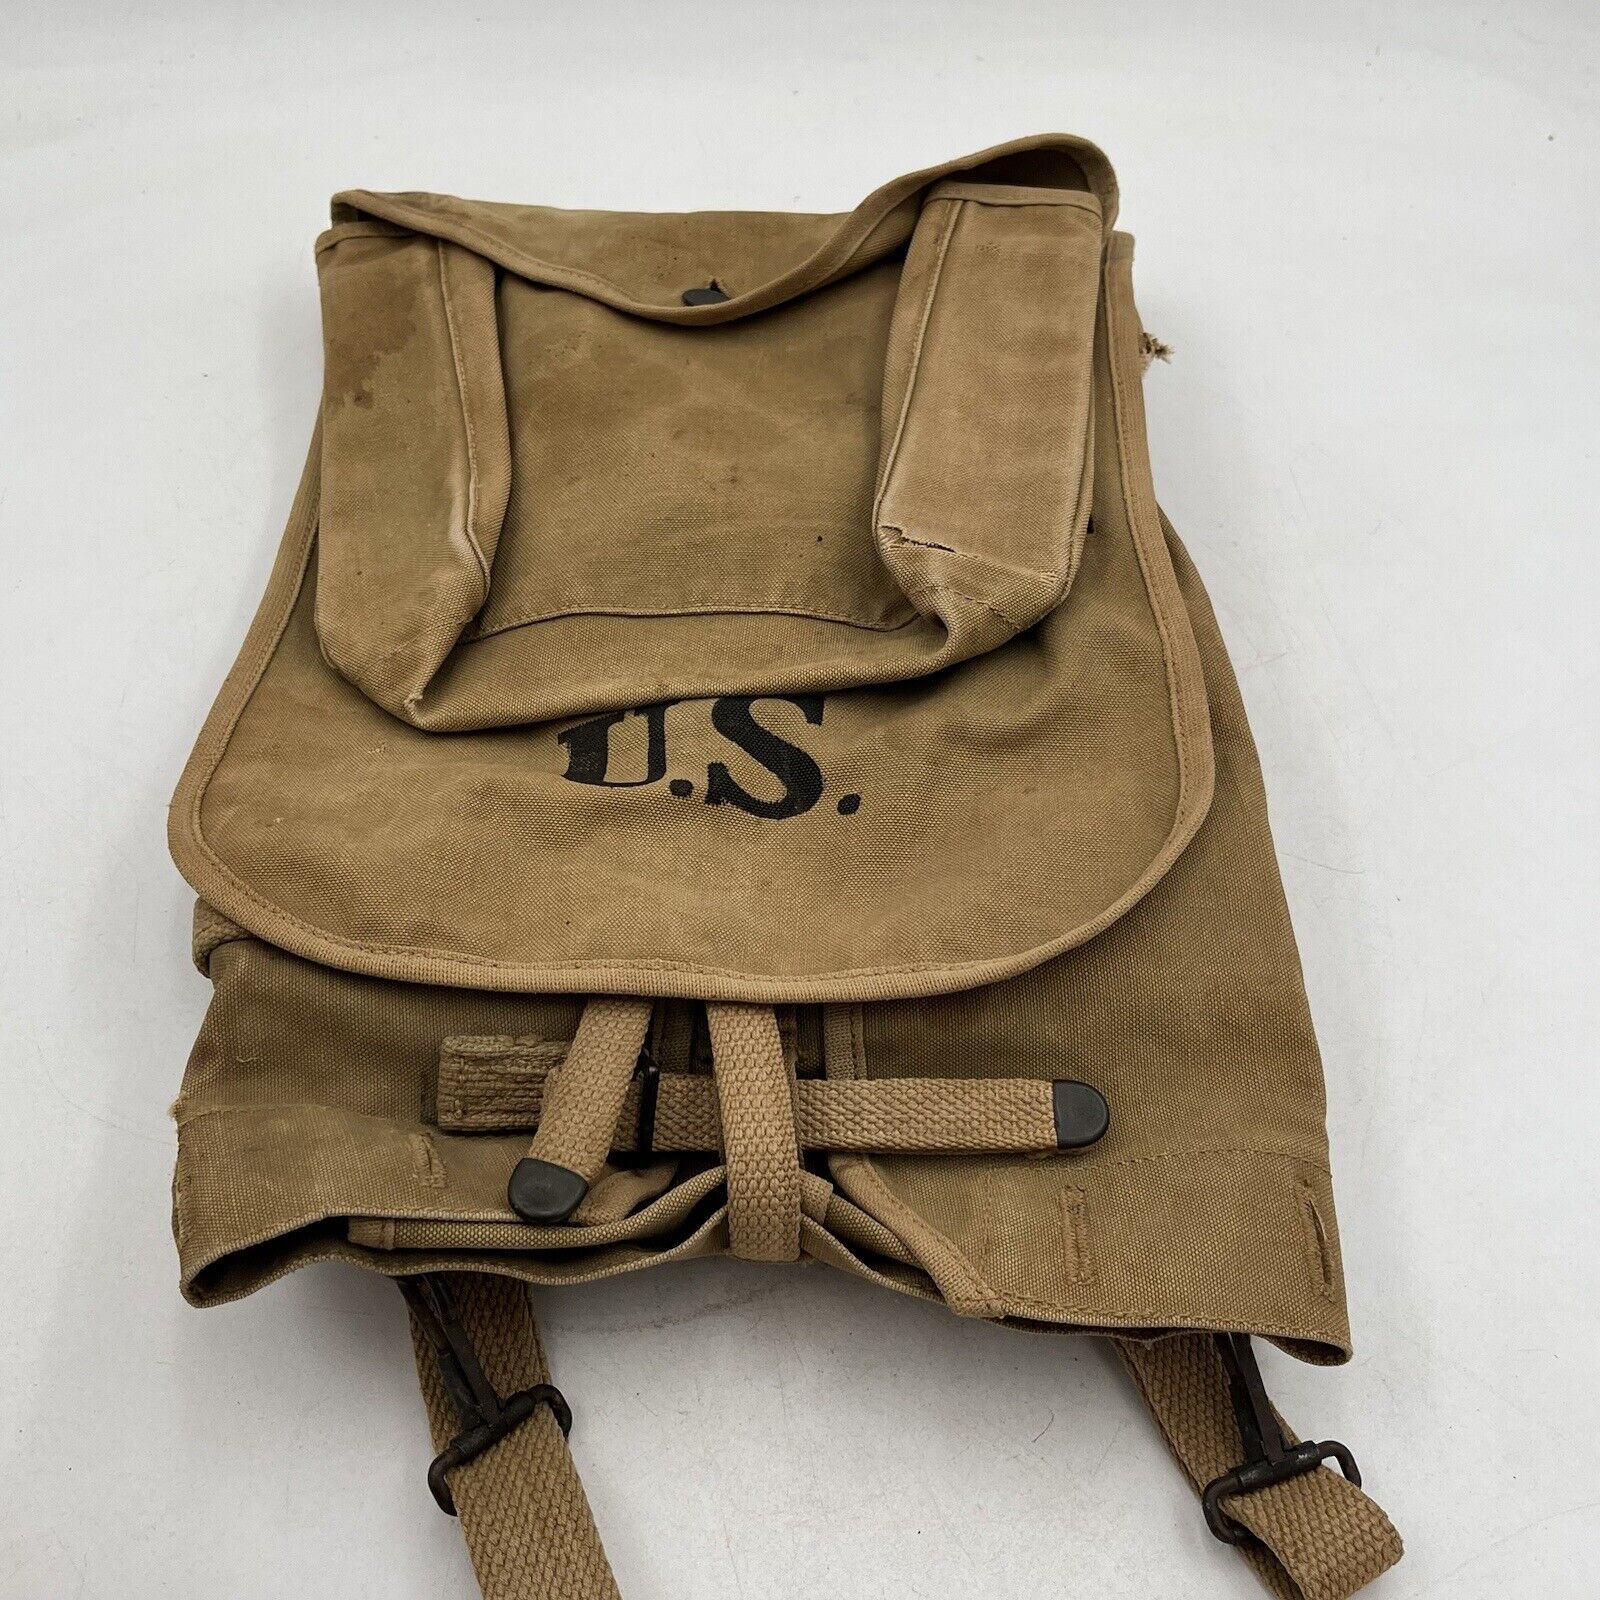 VTG Original WW1 era US Military M-1908 Haversack Backpack Campbell Perkins 7-19